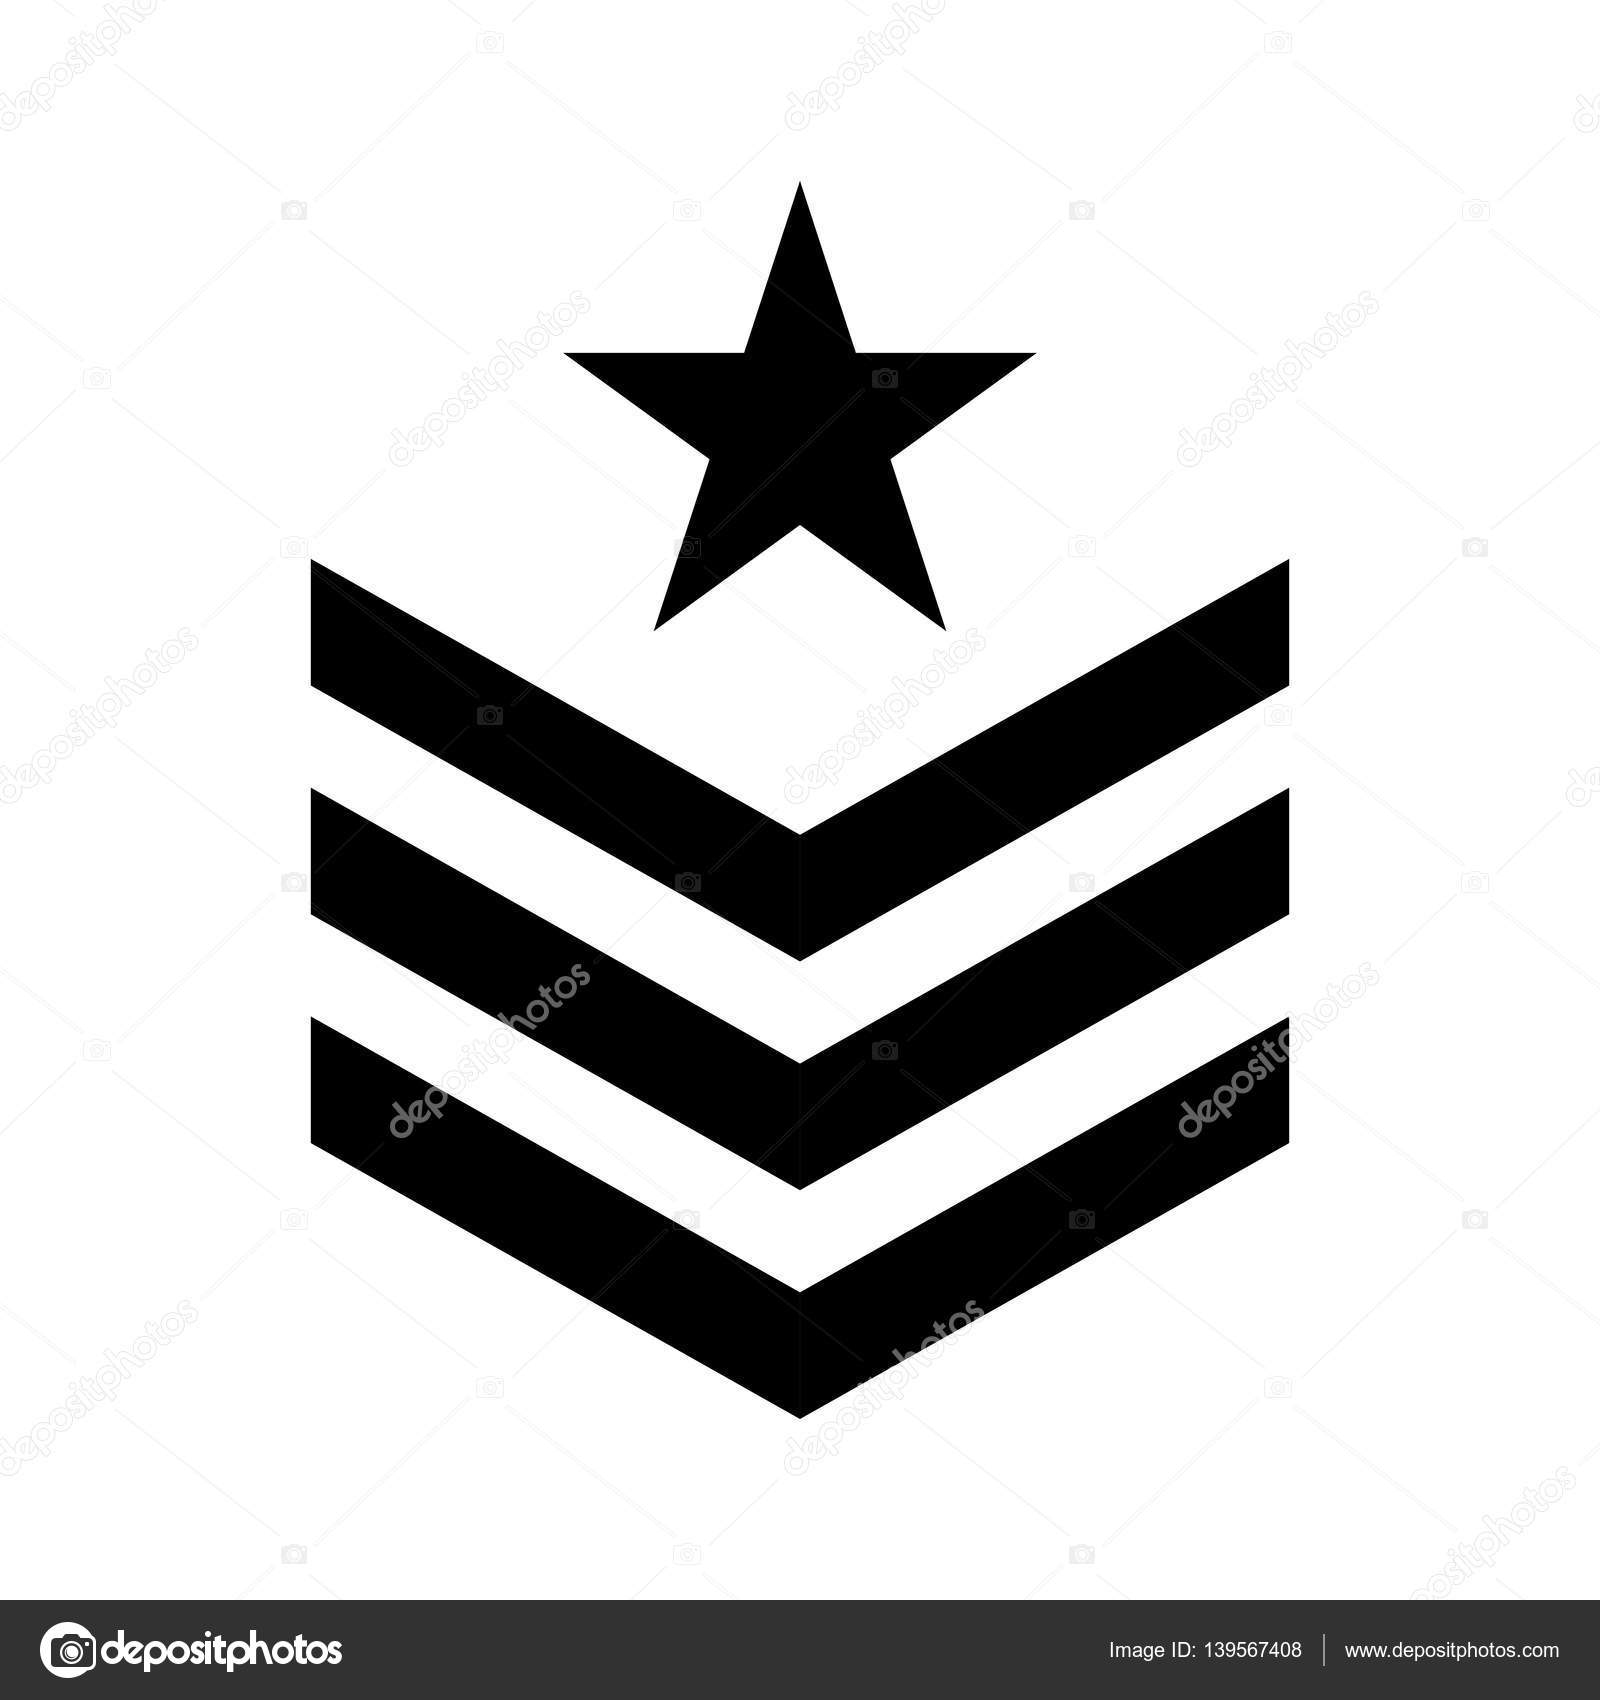  Military  symbol  icon image  Stock Vector  djv 139567408